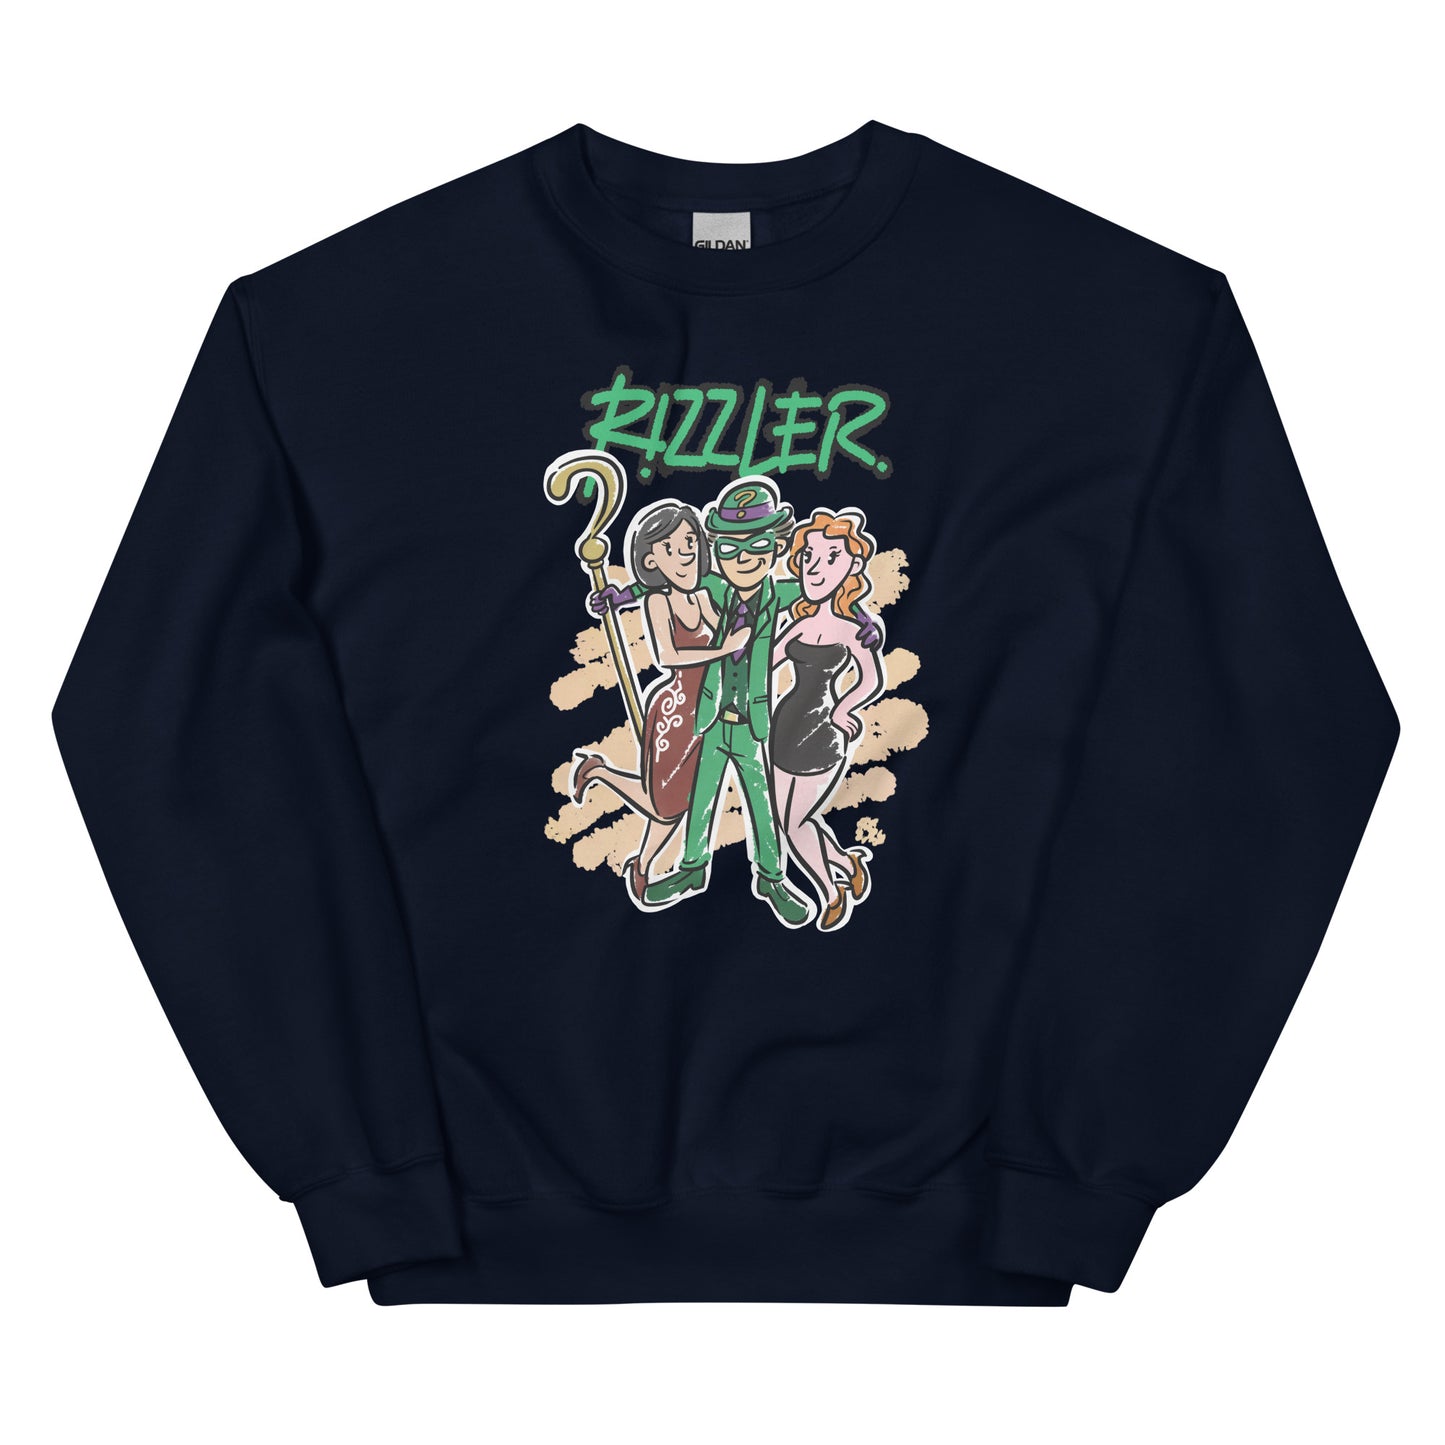 The Rizzler Unisex Sweatshirt